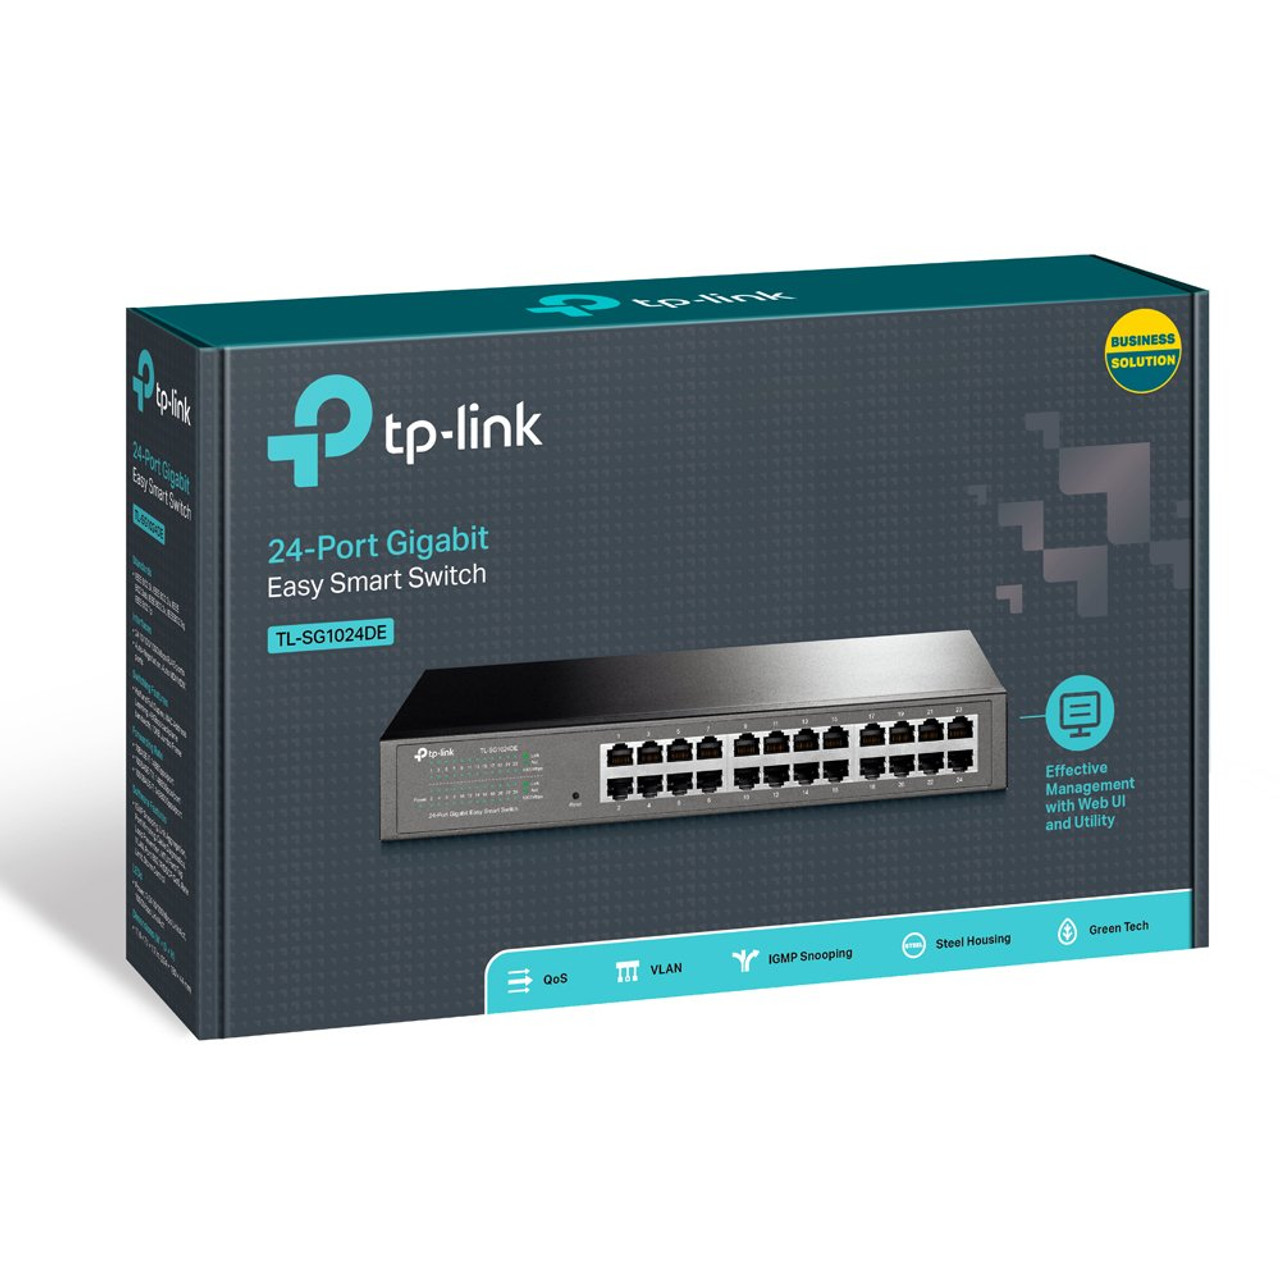 TP-Link 24 Port Gigabit Switch Easy Smart Managed Plug & Play Desktop/Rackmount Sturdy Metal w/ Shielded Ports Support QoS, Vlan, IGMP & LAG (TL-SG1024DE),Black